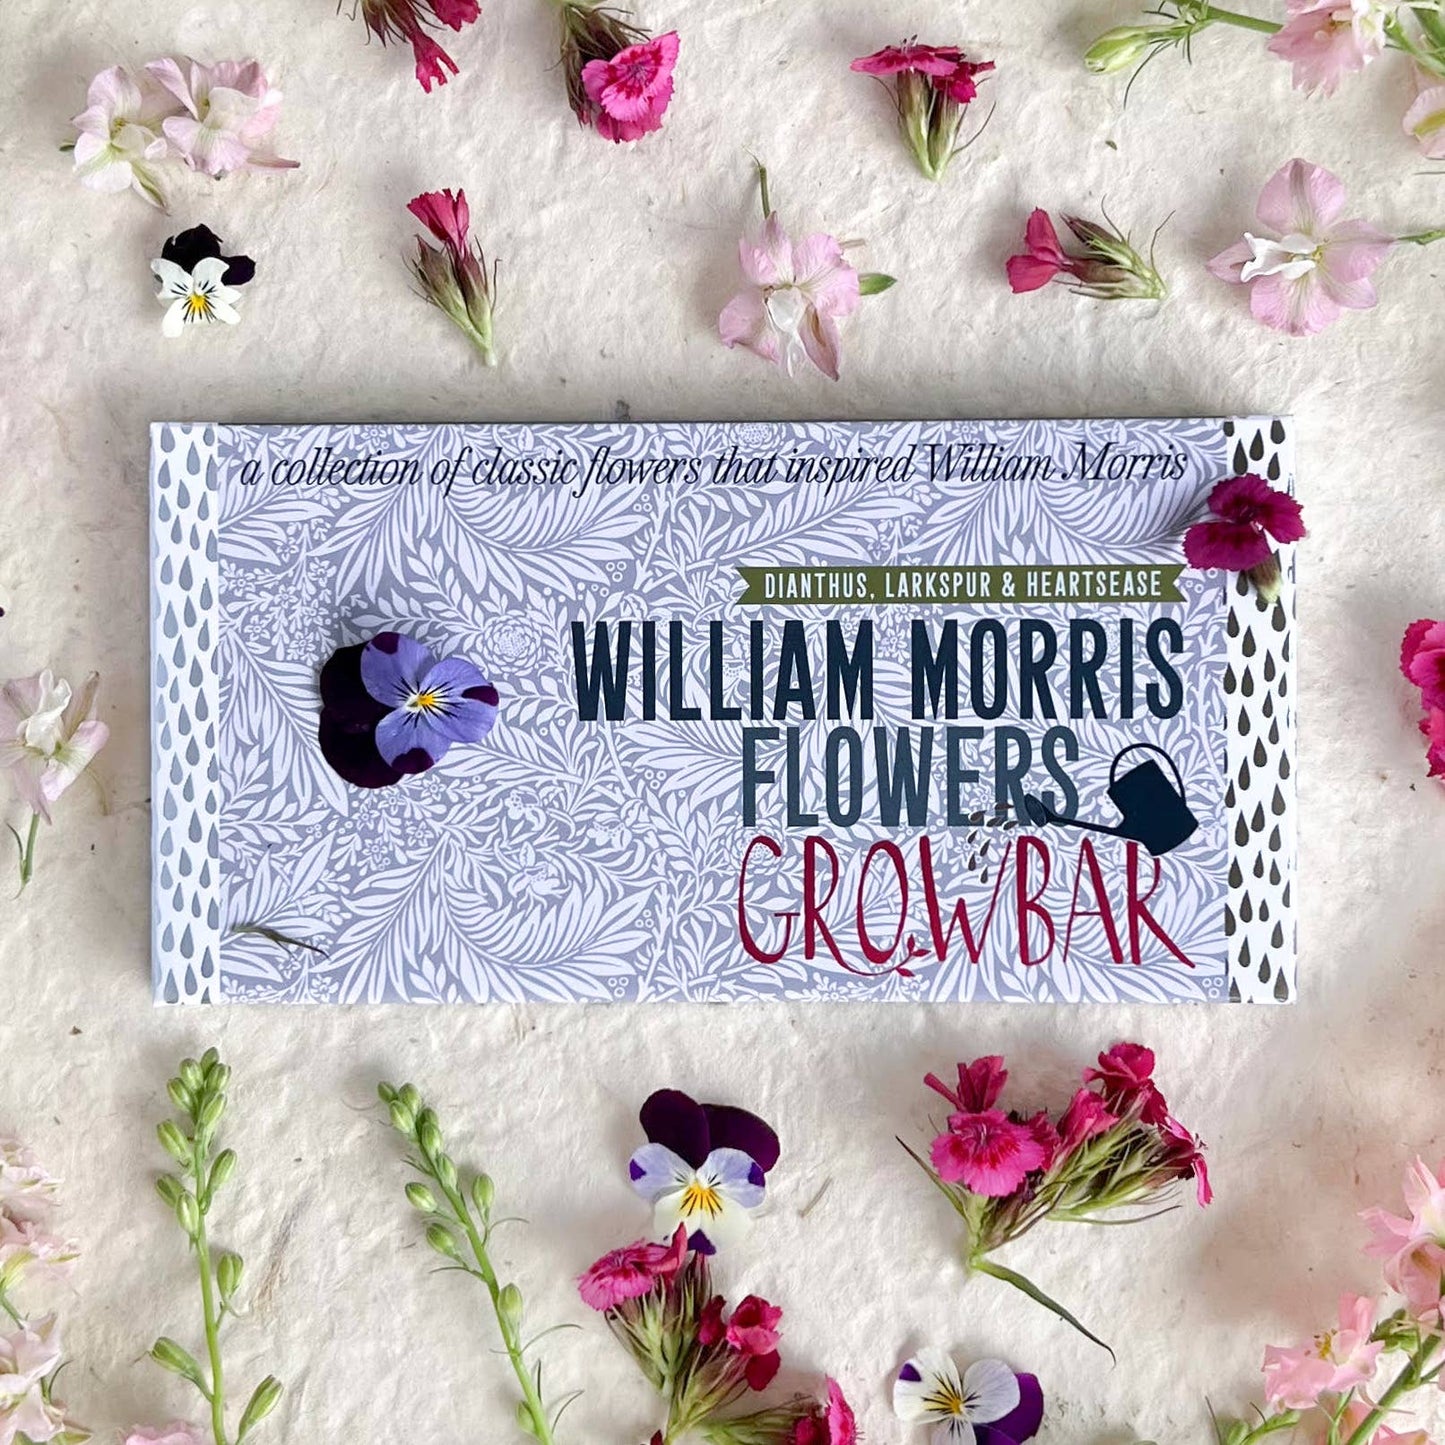 The William Morris Flowers Growbar